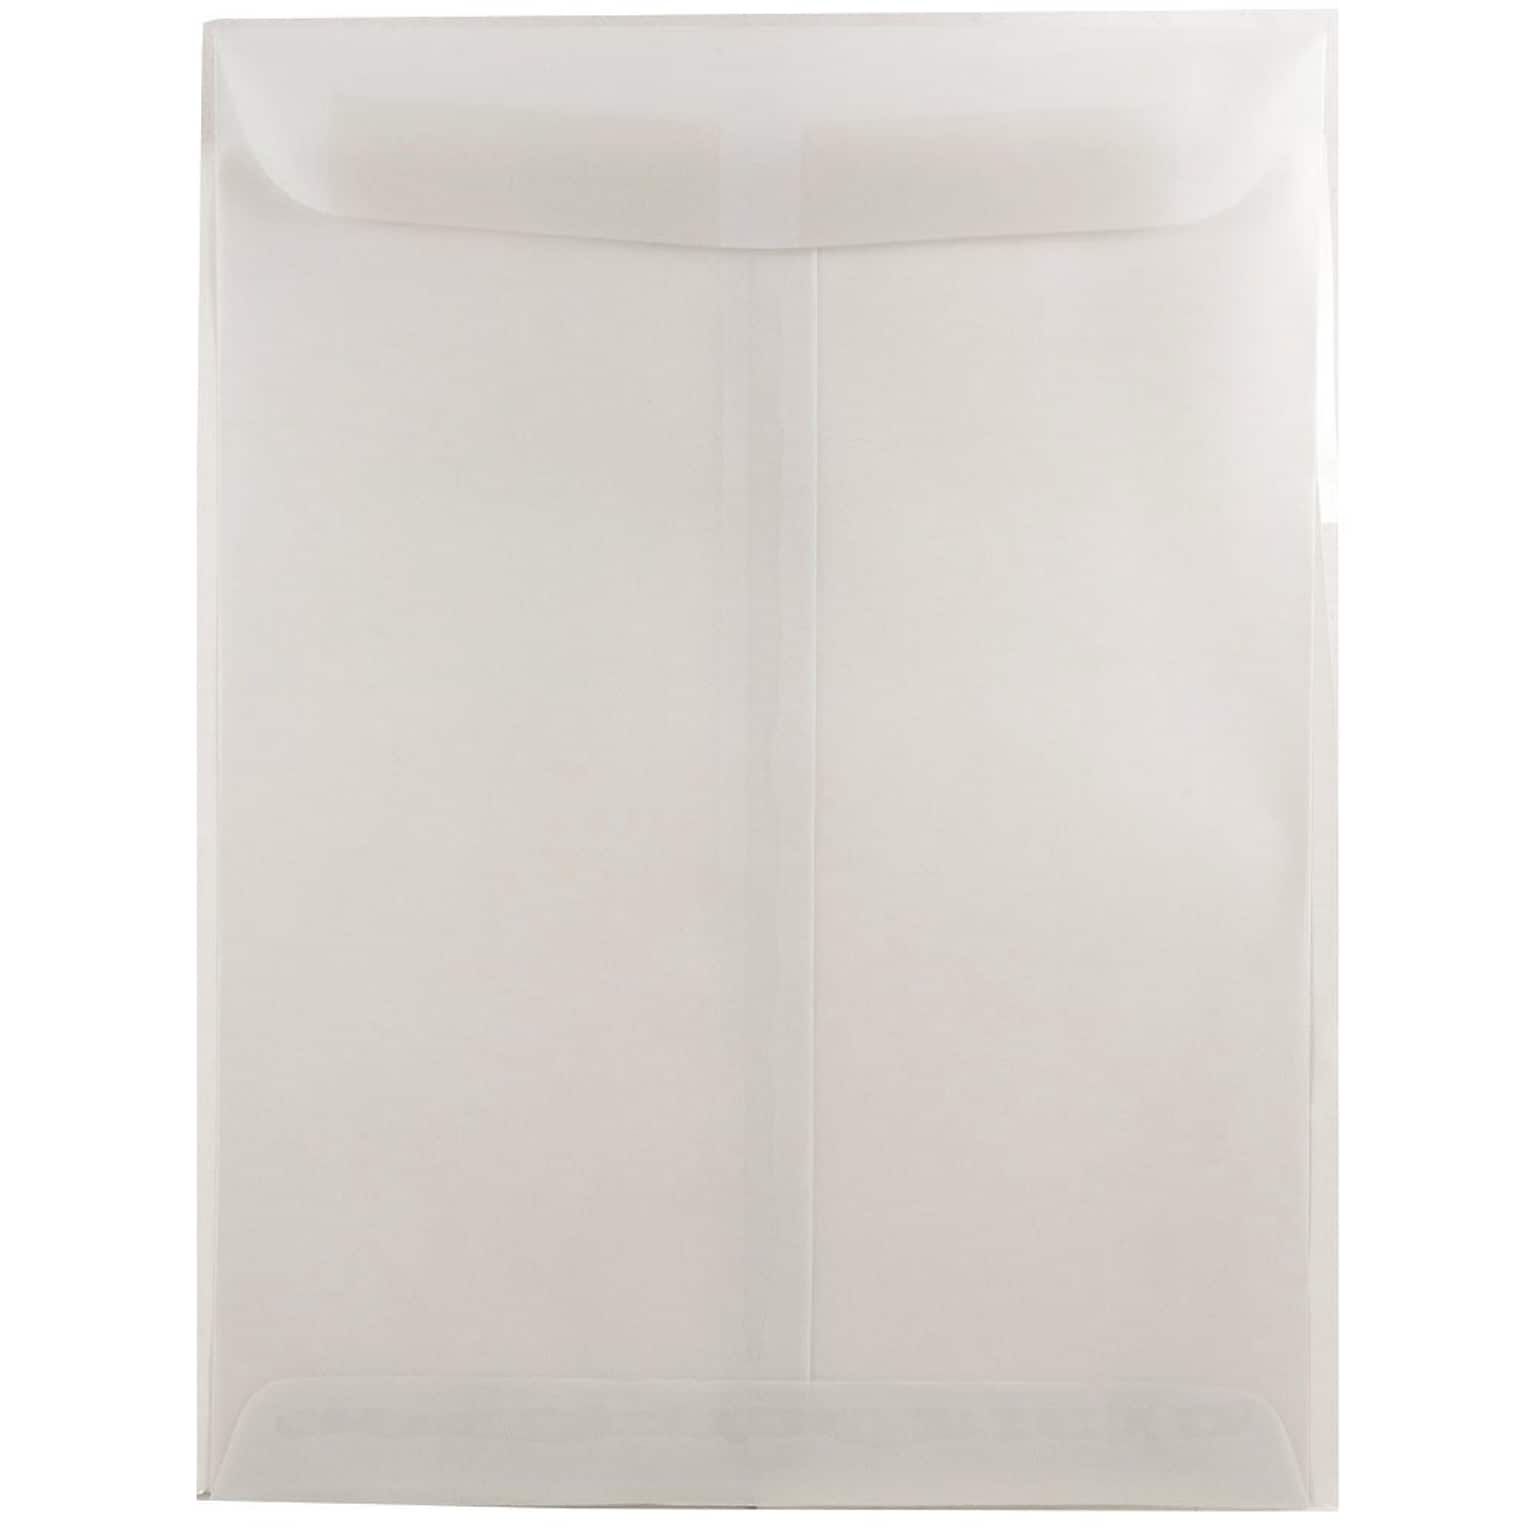 JAM Paper 9 x 12 Open End Catalog Translucent Vellum Envelopes, Clear, 25/Pack (2851376a)